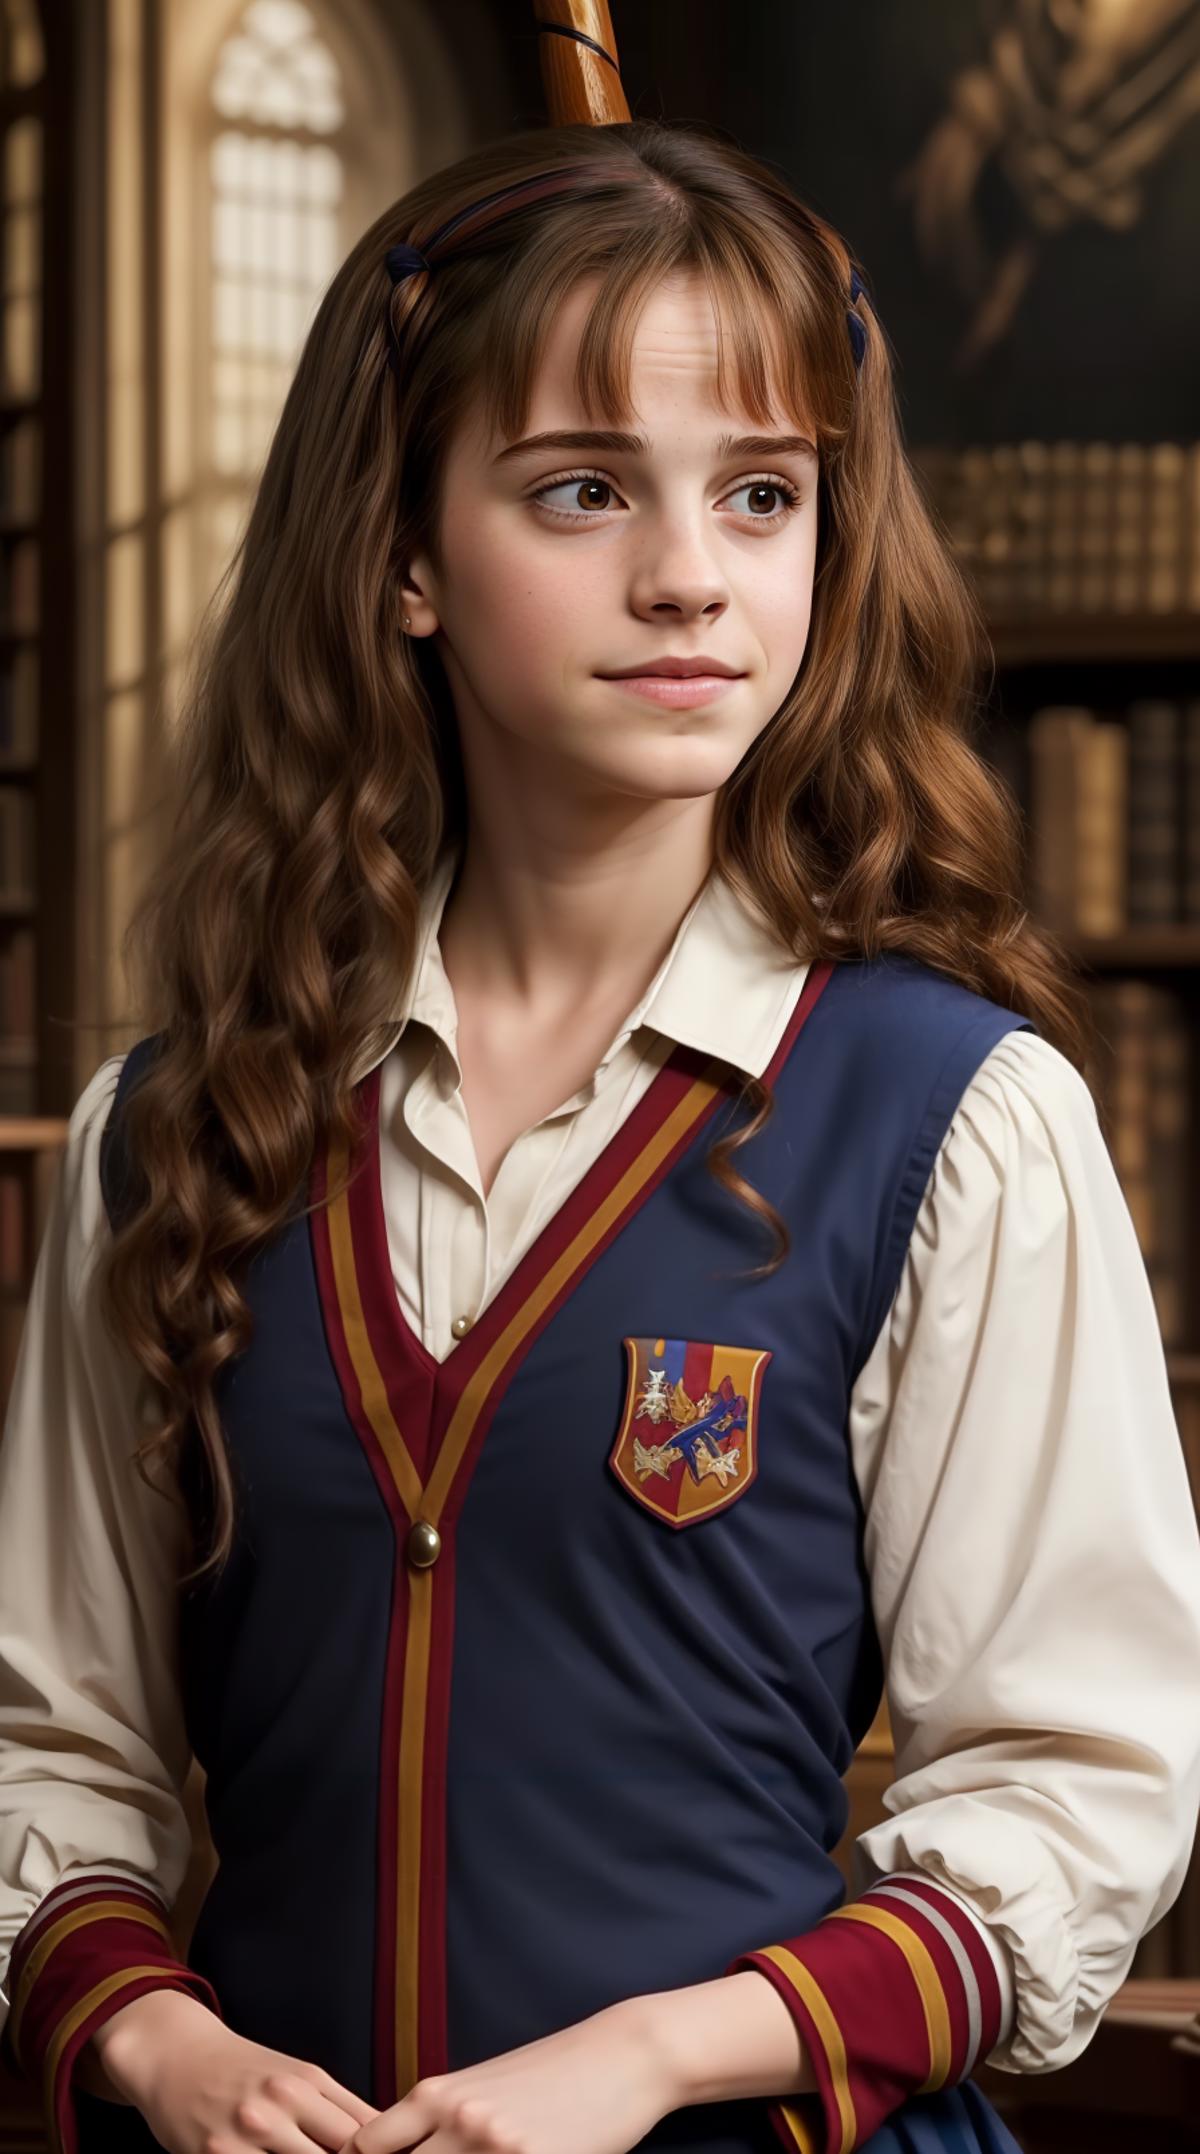 Hermione Granger - Emma Watson image by showmaker123